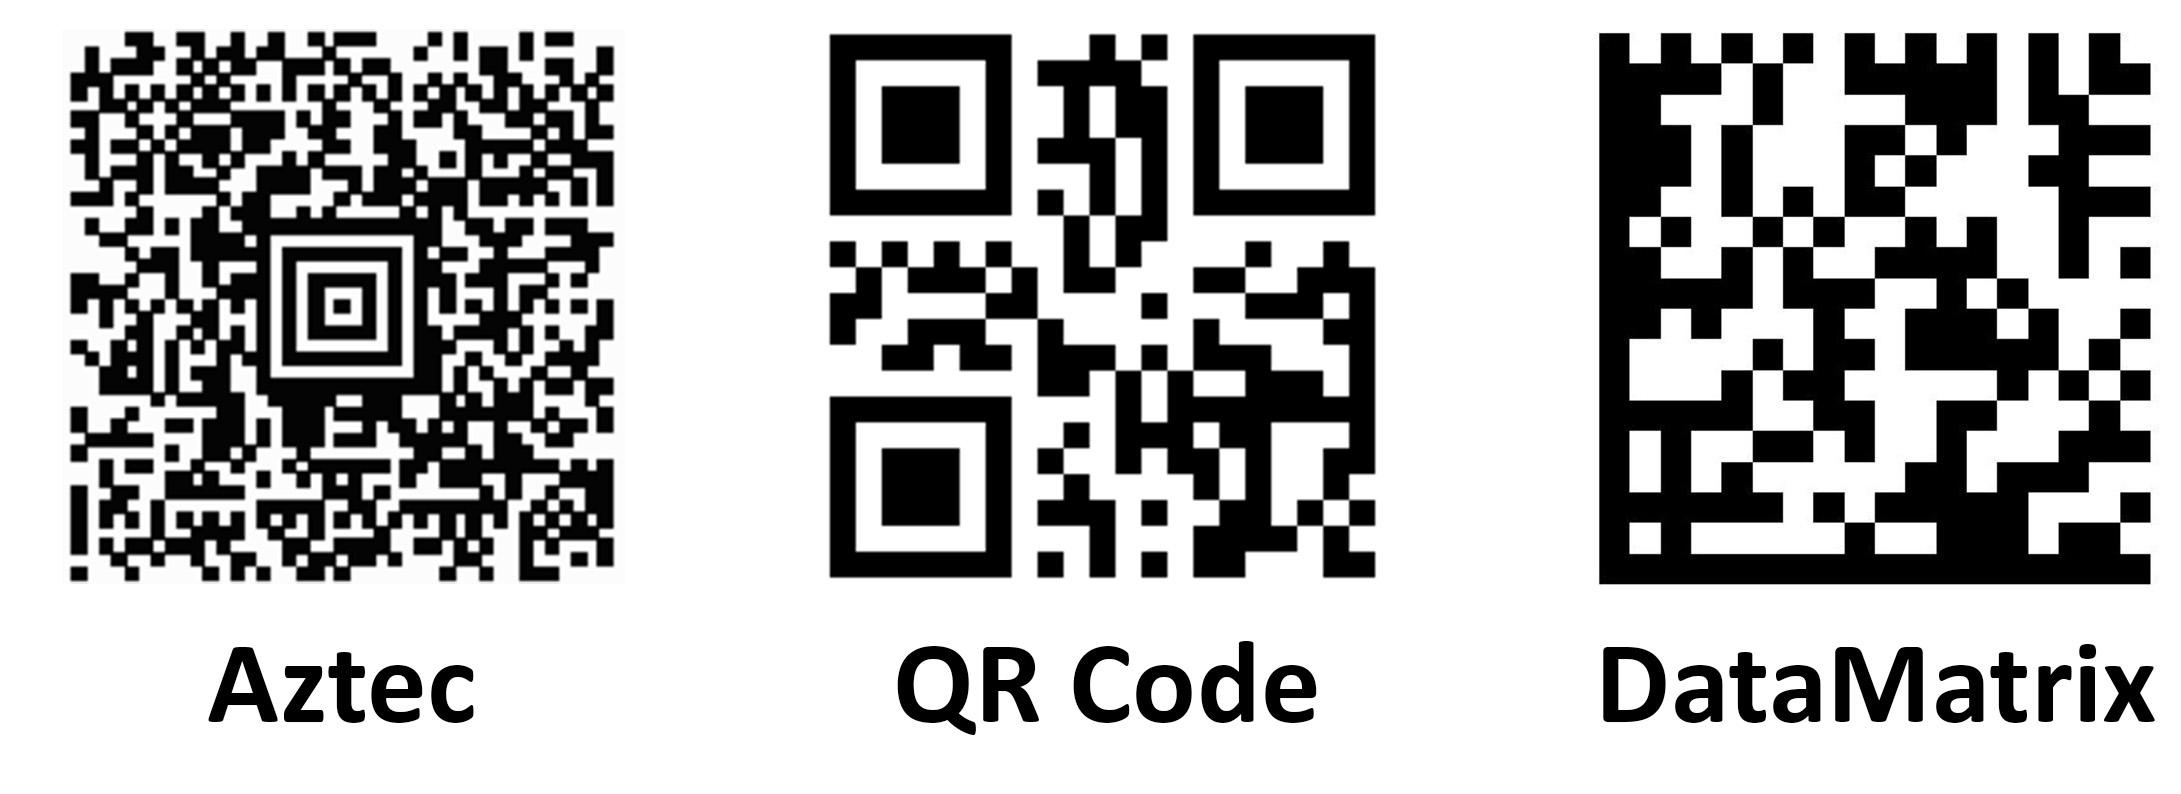 2d qr код. Штрих код. Двумерные штрих-коды. Двухмерные штриховые коды. Двумерный QR код.